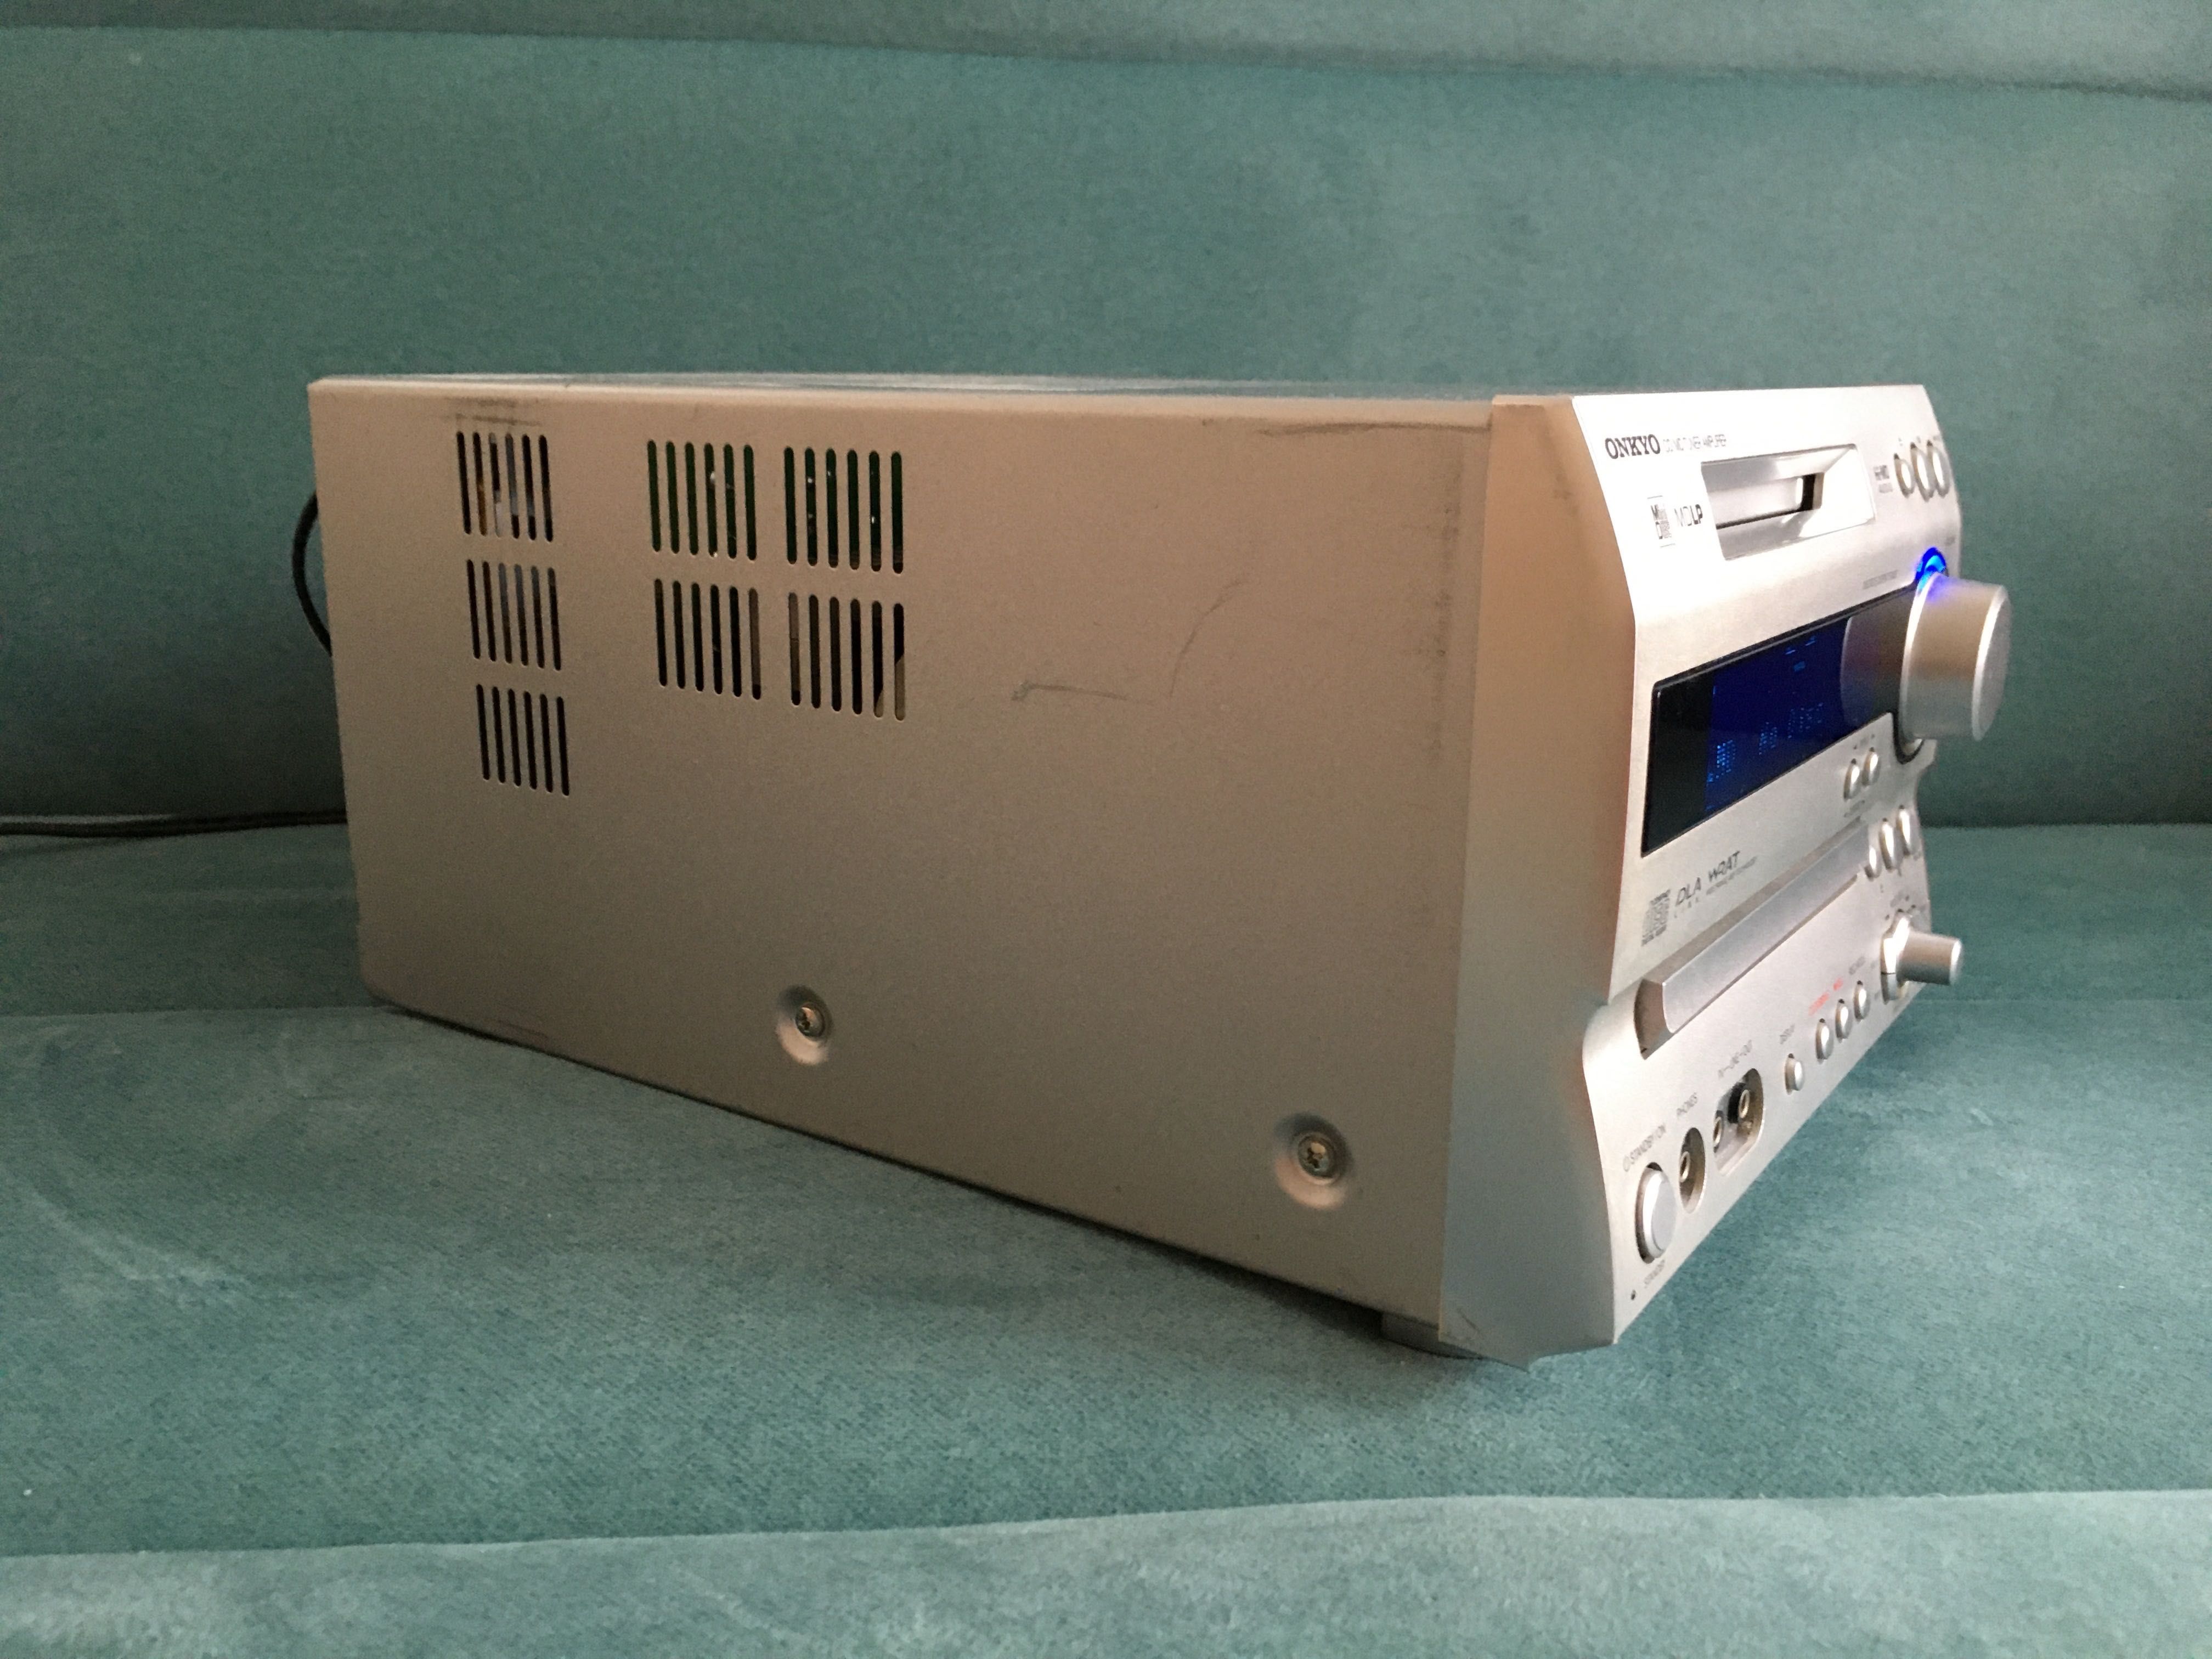 Onkyo FR-N7X CD / FM / Hi-MD Minidisc Recorder